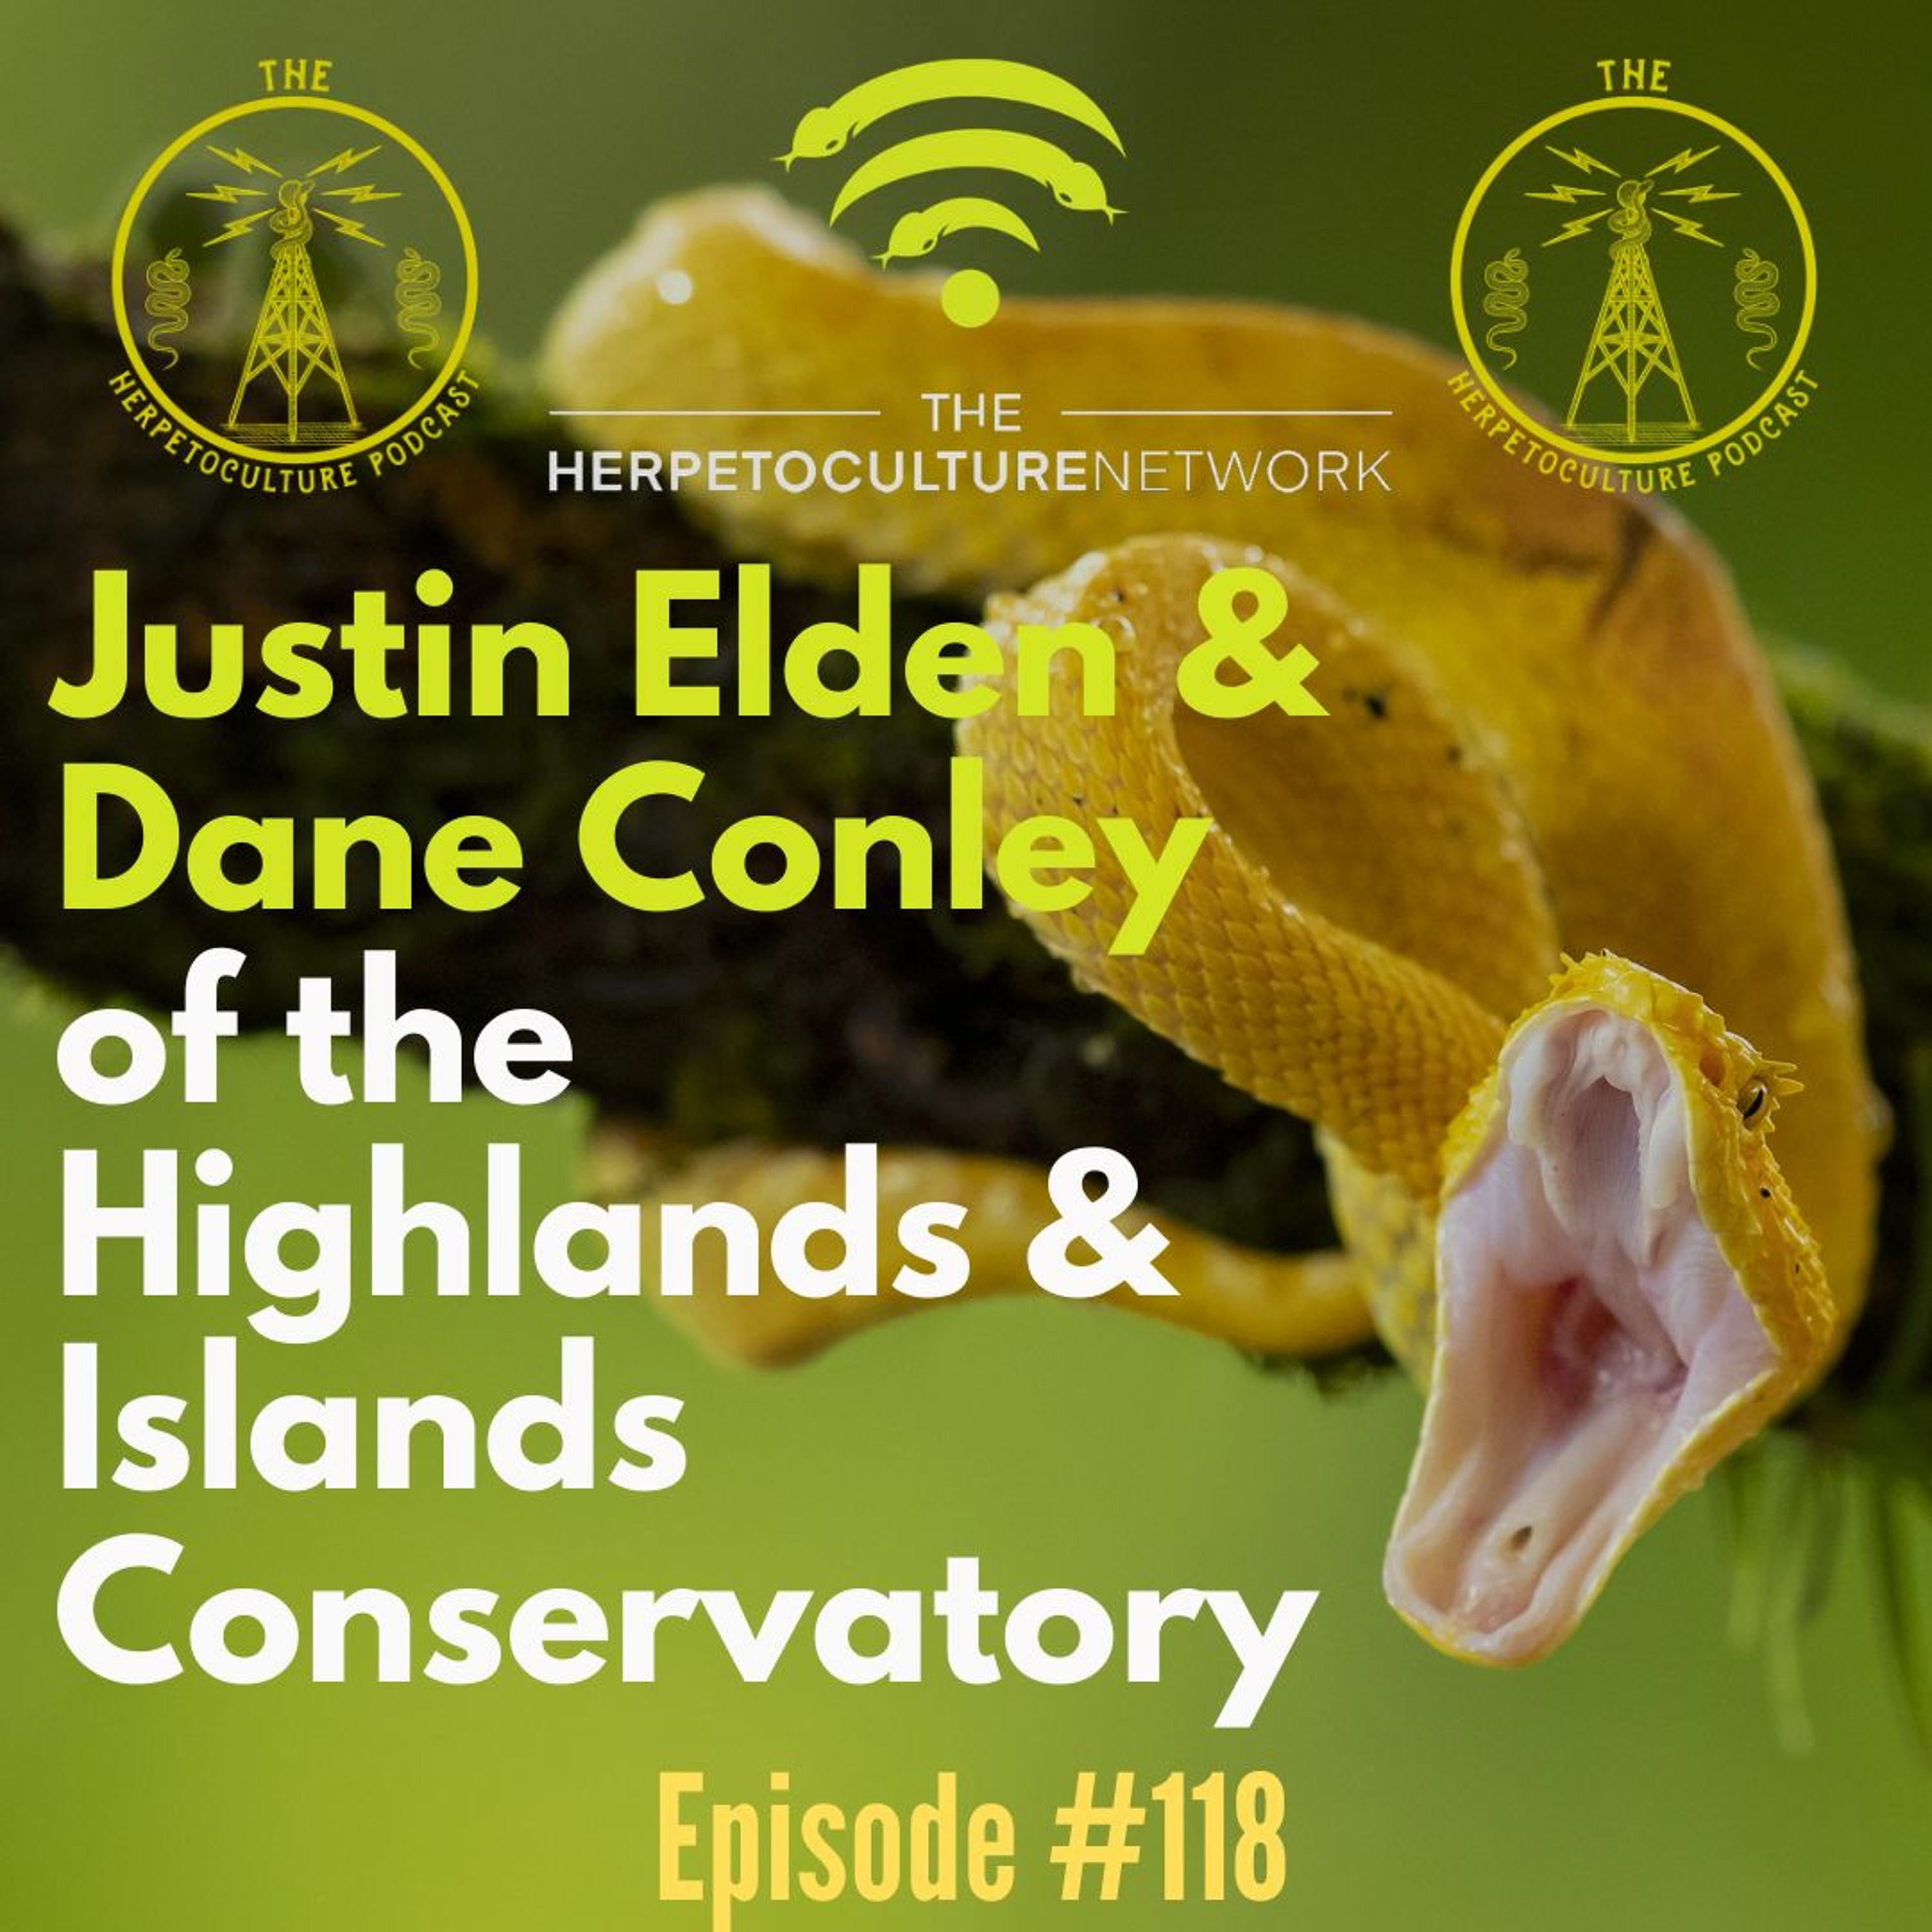 Justin Elden & Dane Conley of the Highlands & Islands Conservatory